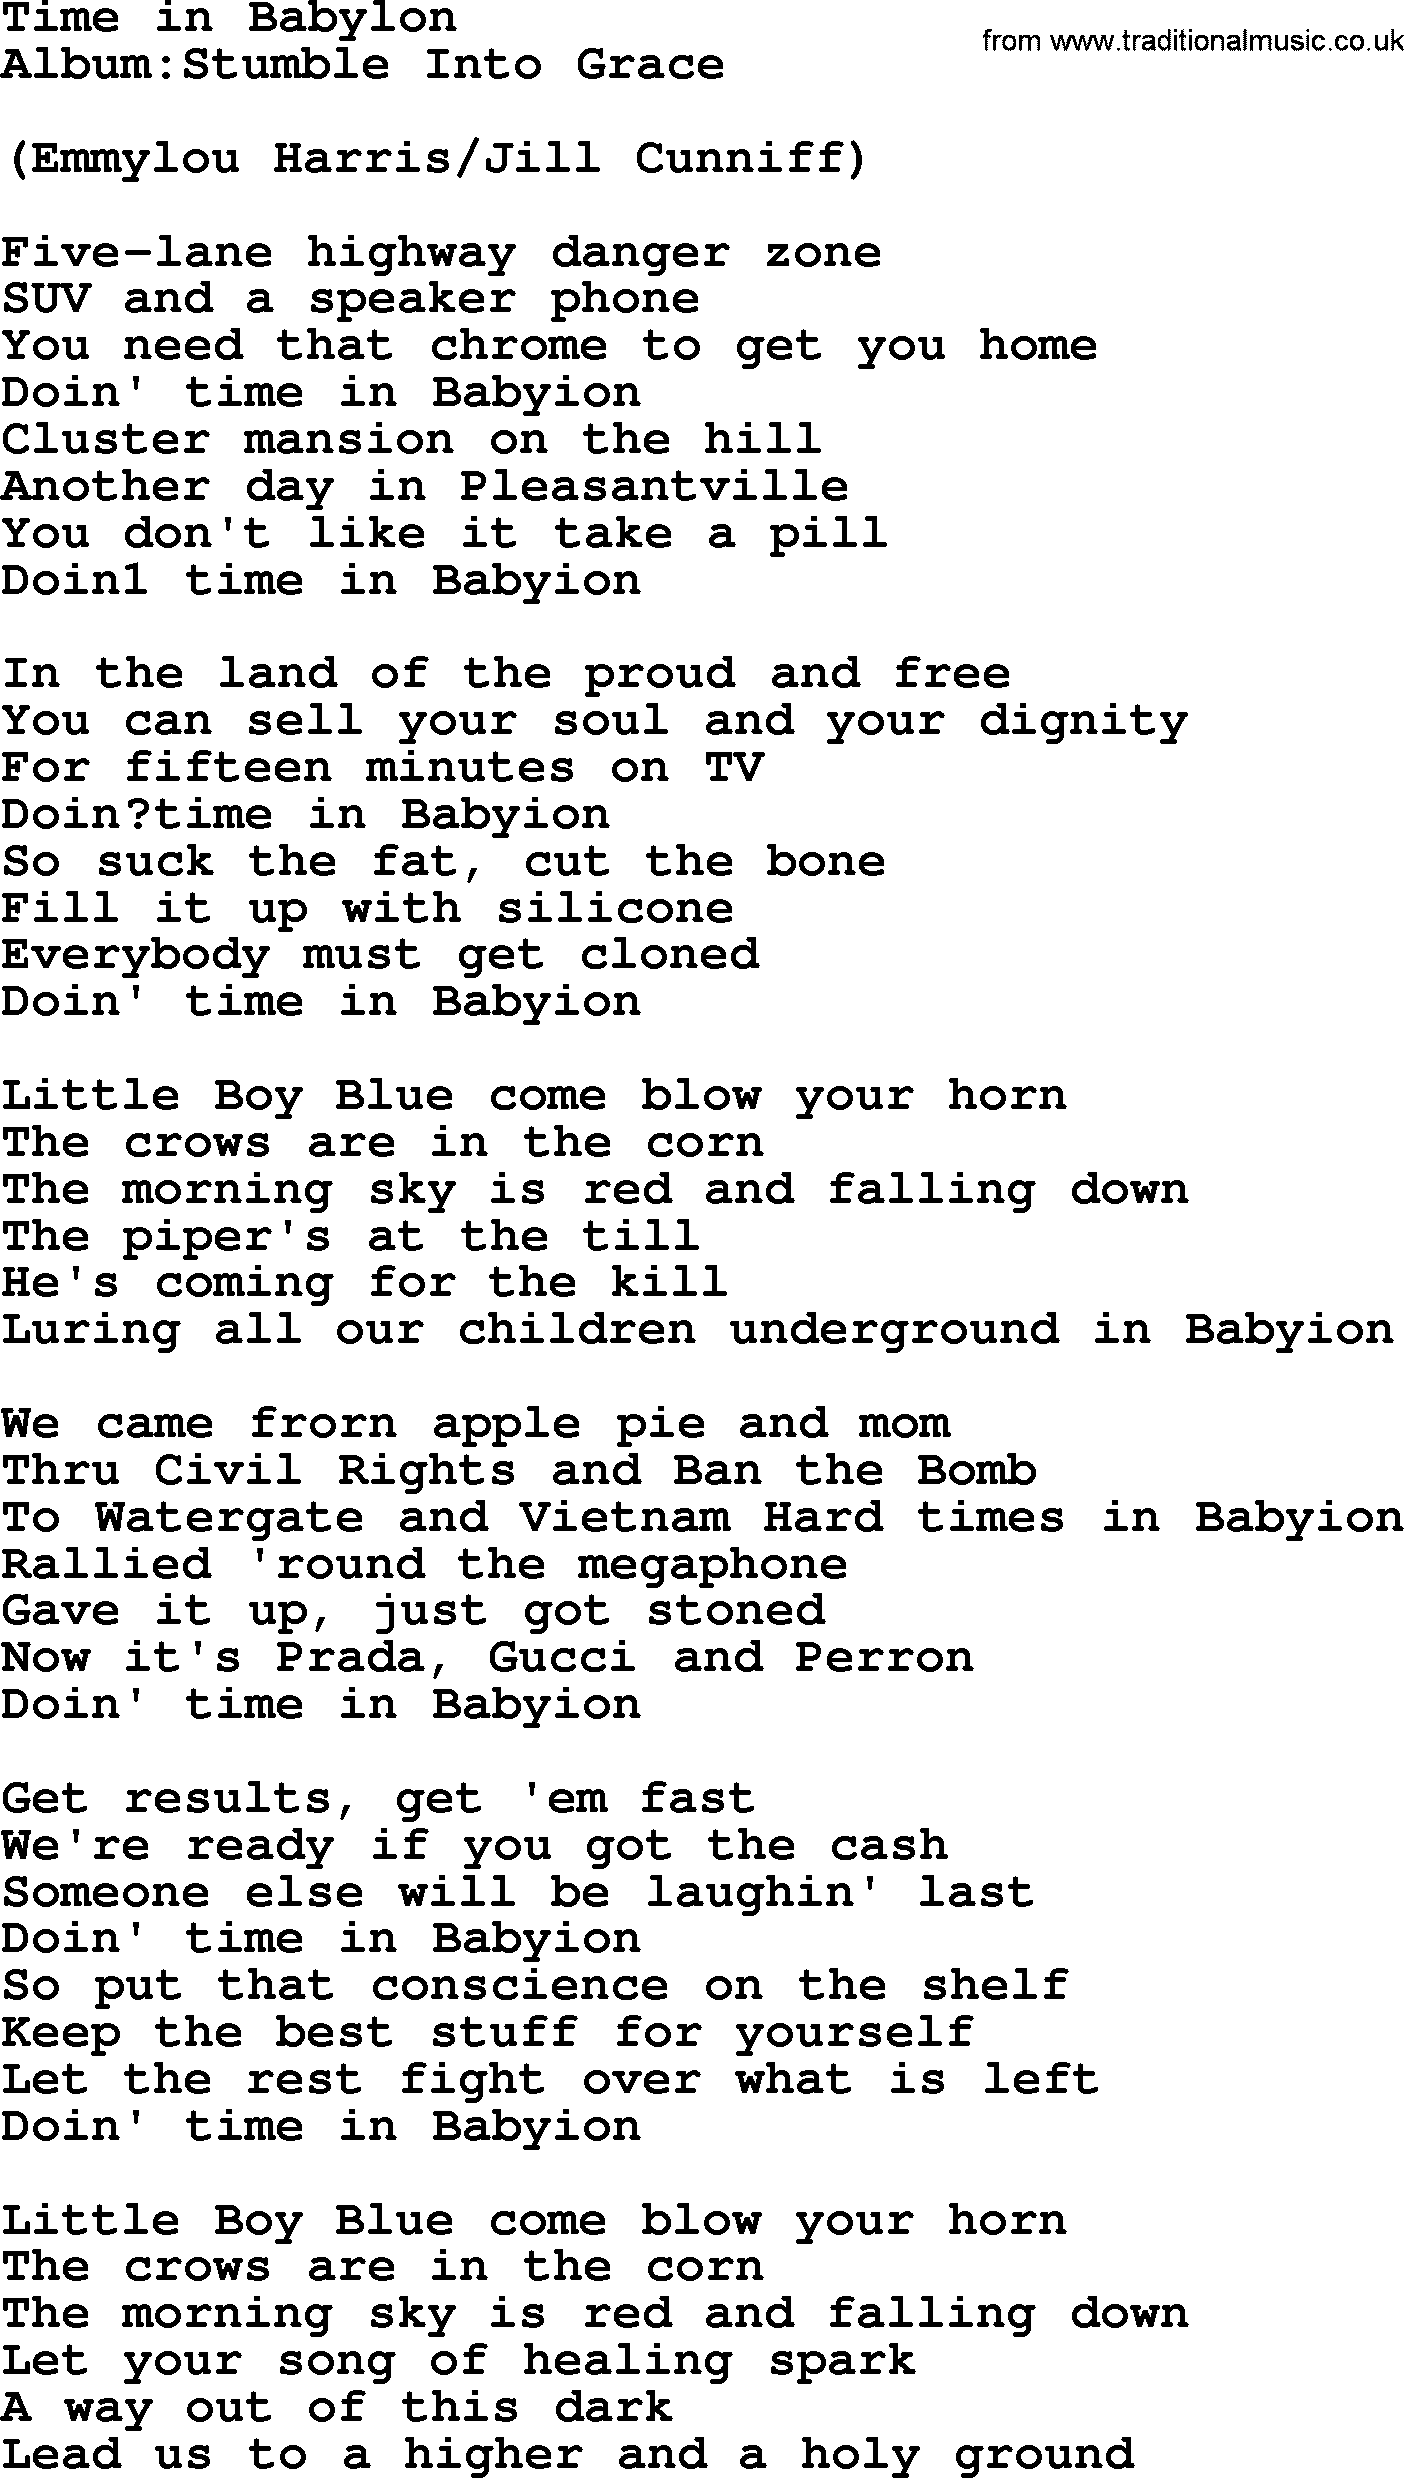 Emmylou Harris song: Time in Babylon lyrics